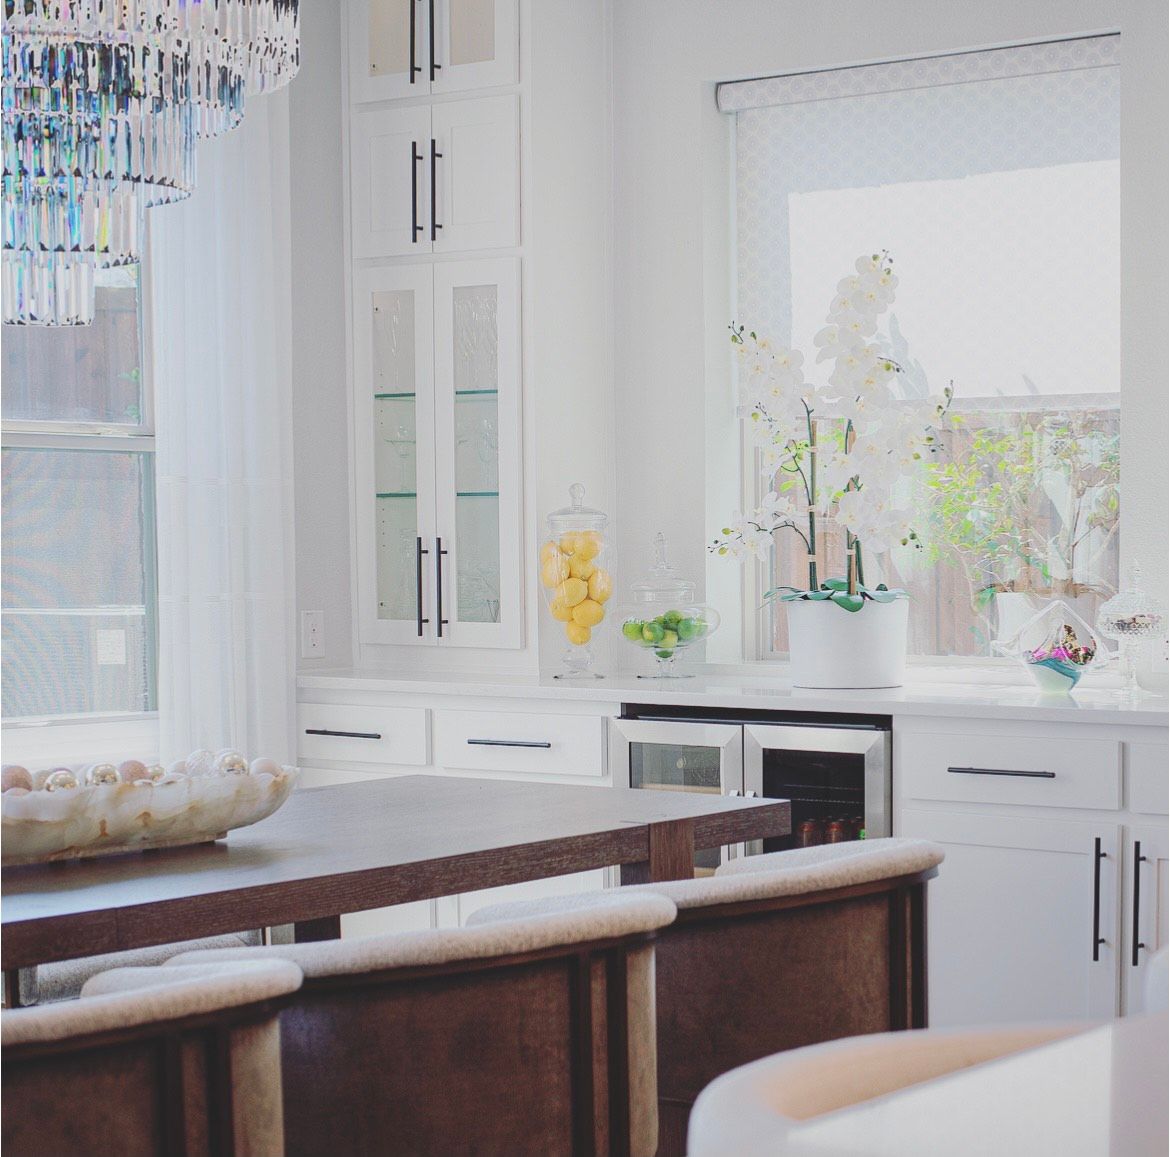 Designs-By-Keti-Dallas-Timeless-Luxury-Kitchen-Cabinet-Styles-White-Kitchen-Backsplash-Large-Island